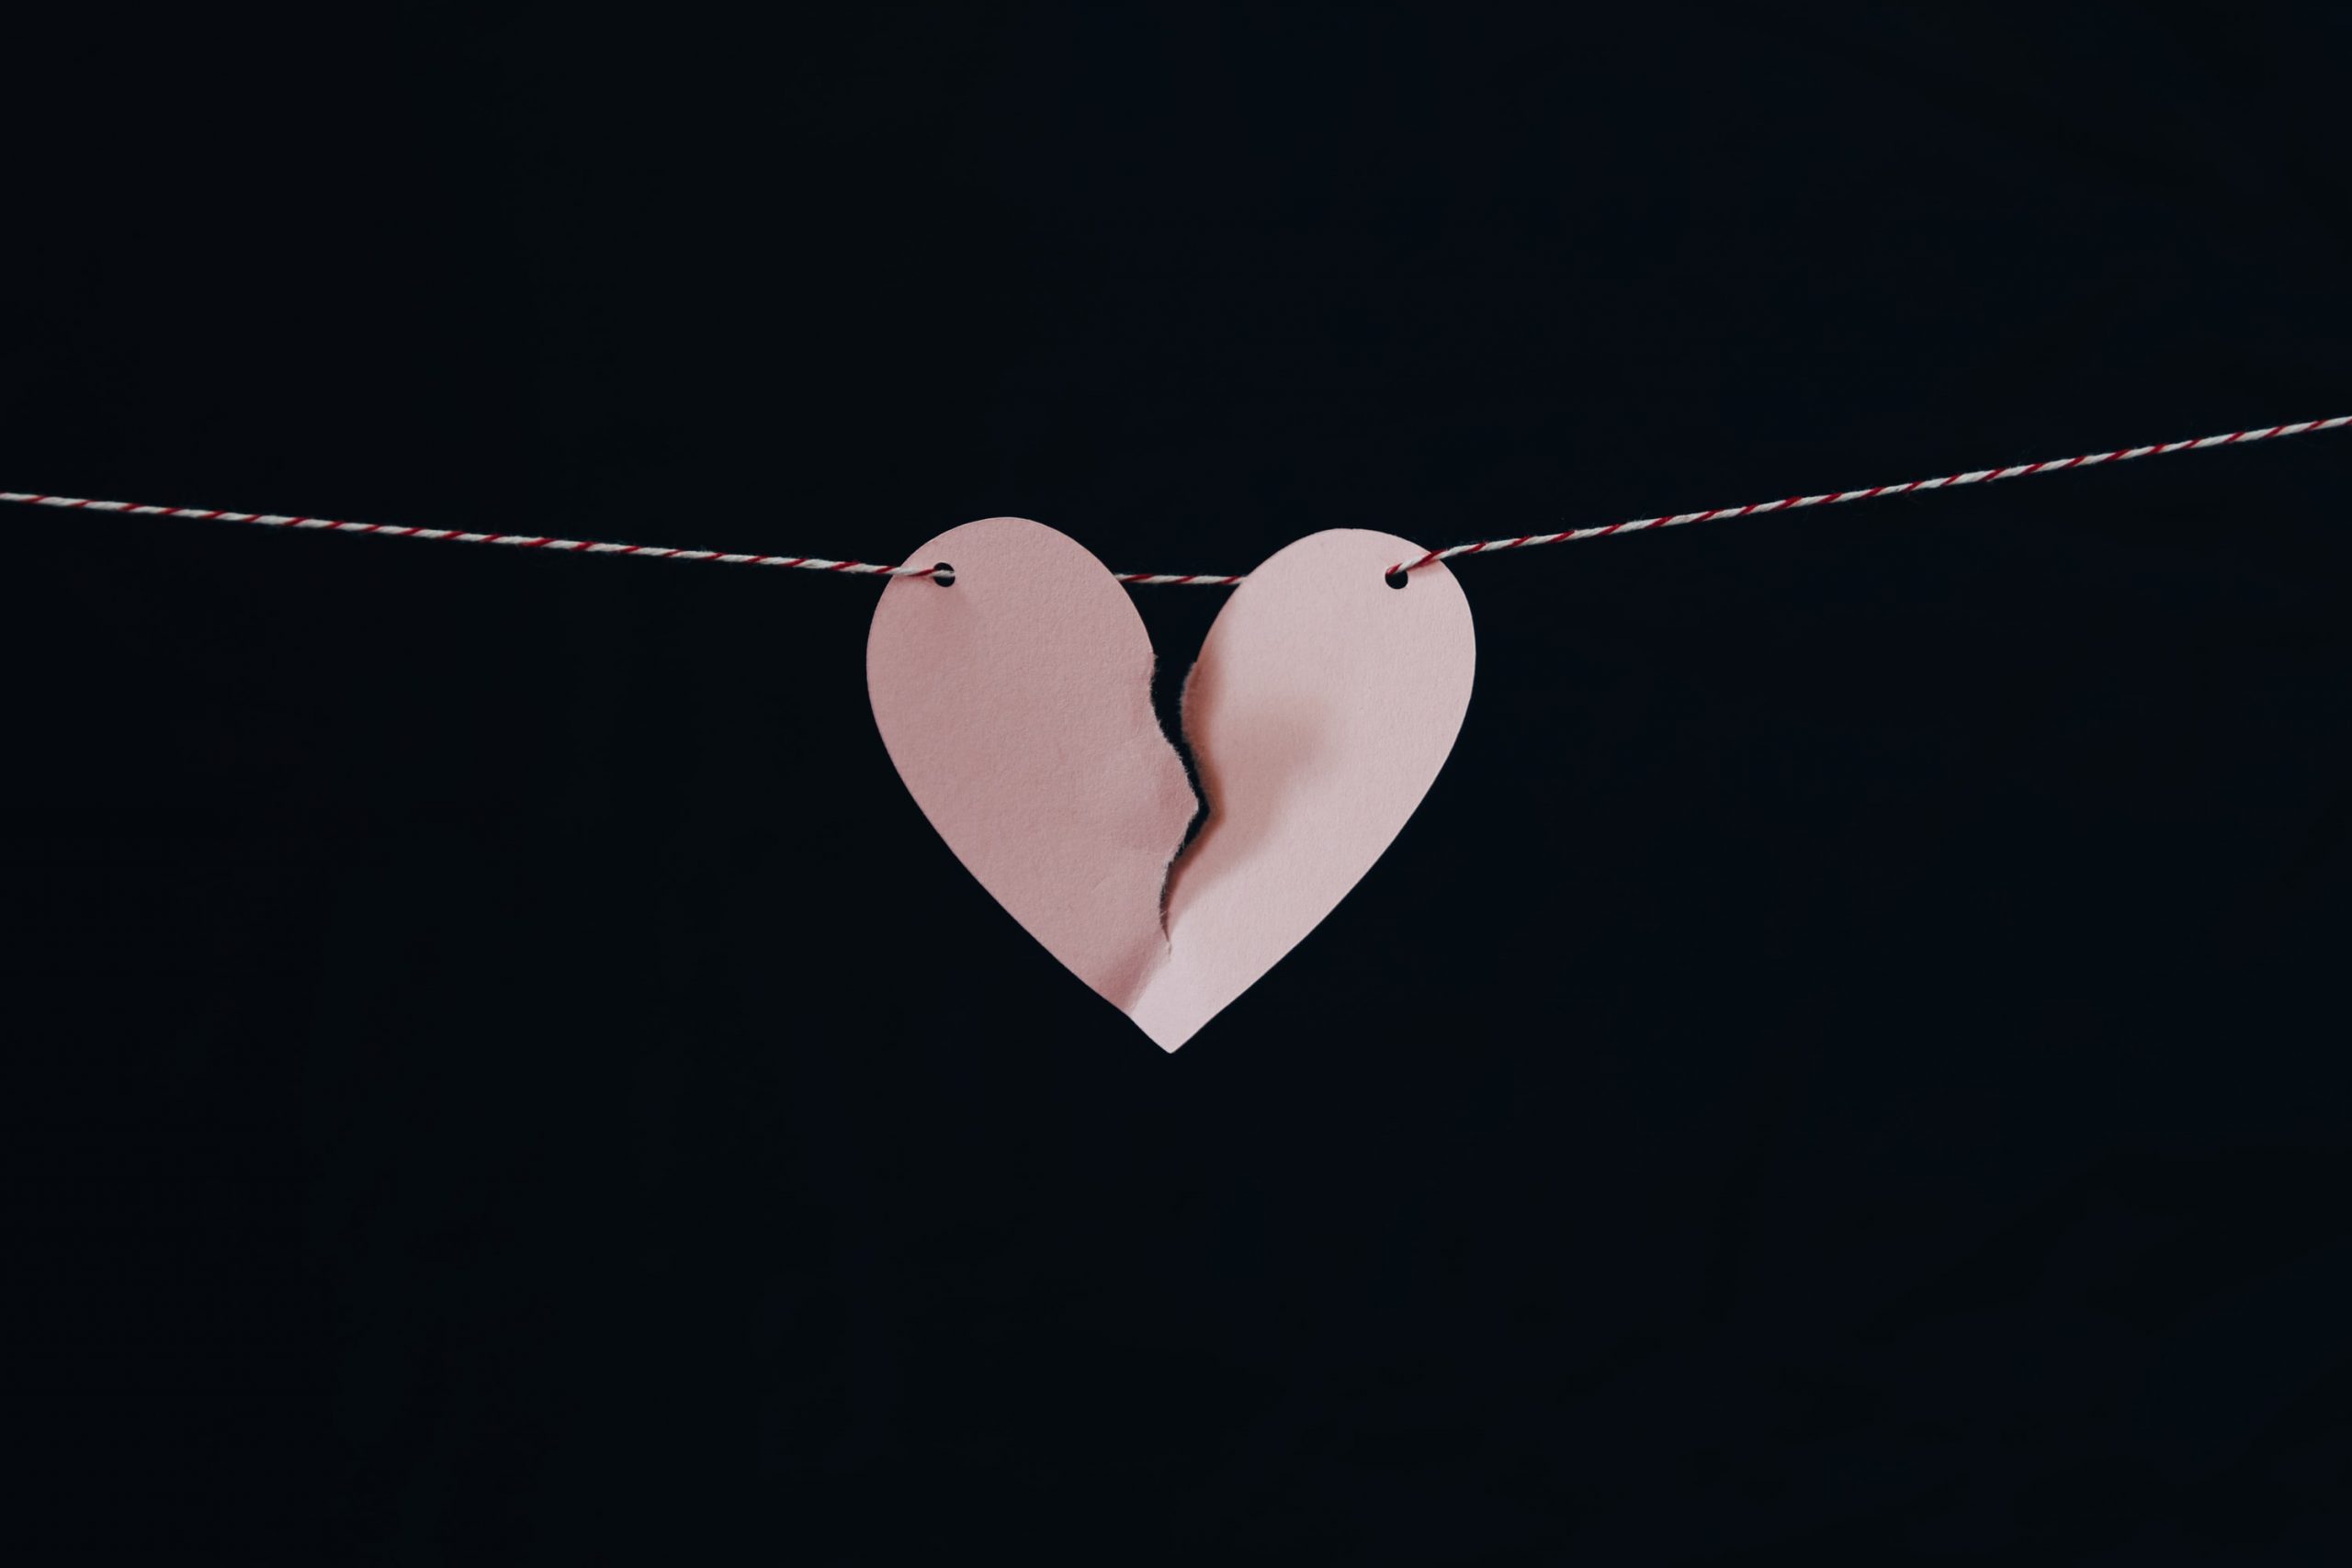 Broken Heart-Shaped Paper on a String